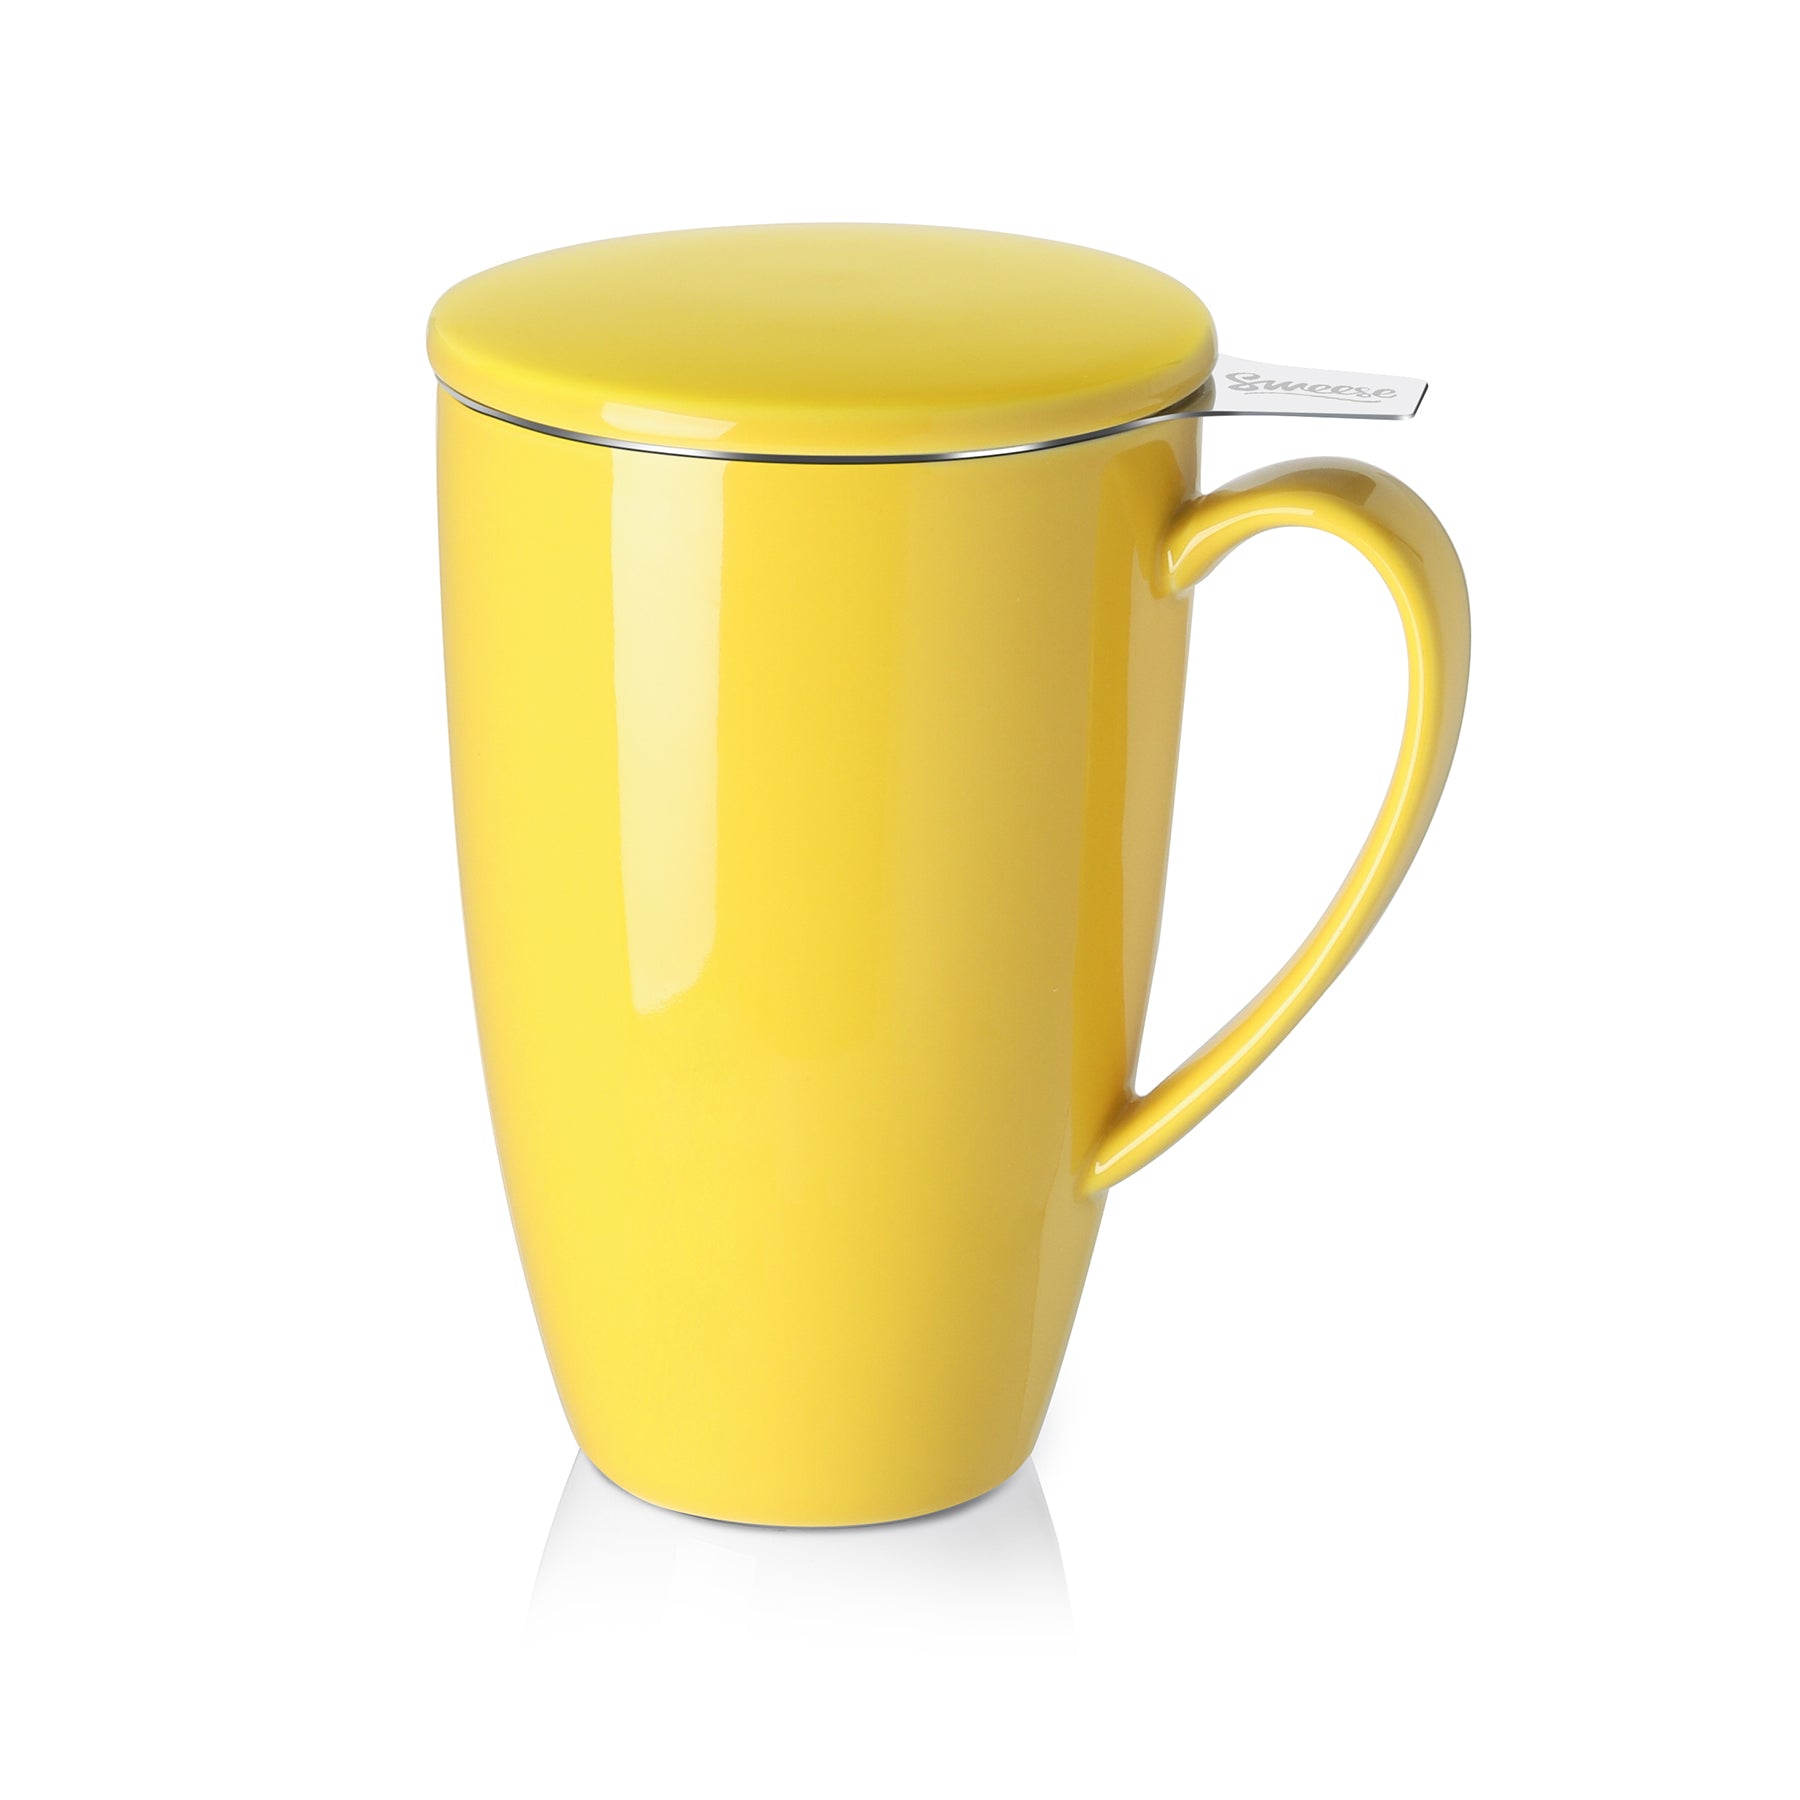  Sweese Porcelain Mugs - 12 Ounce for Coffee, Tea